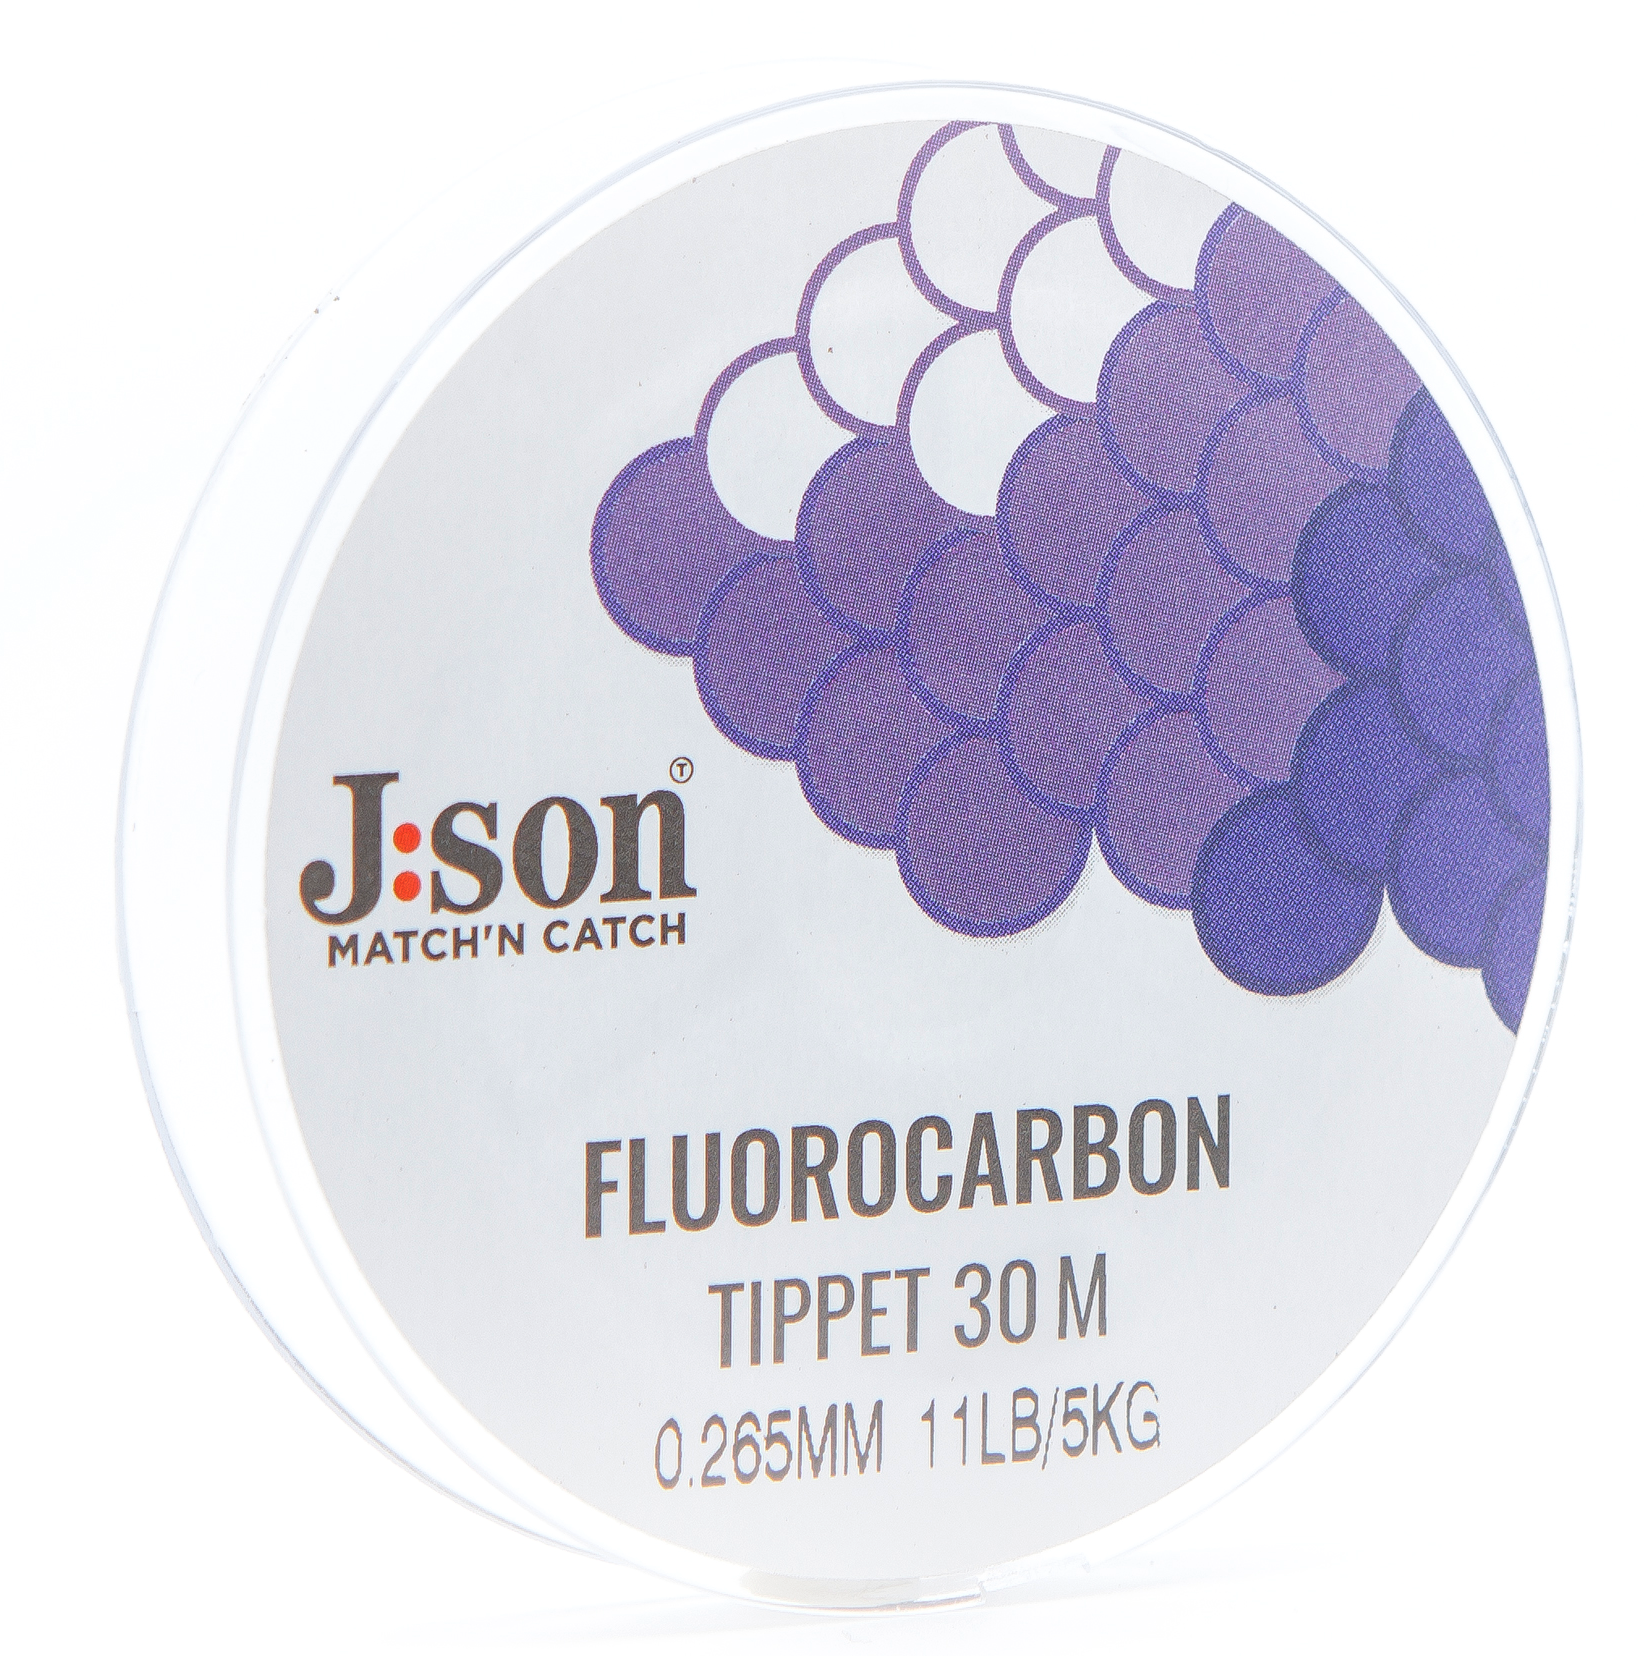 Fluorocarbon Tippet 30 m 0.285mm